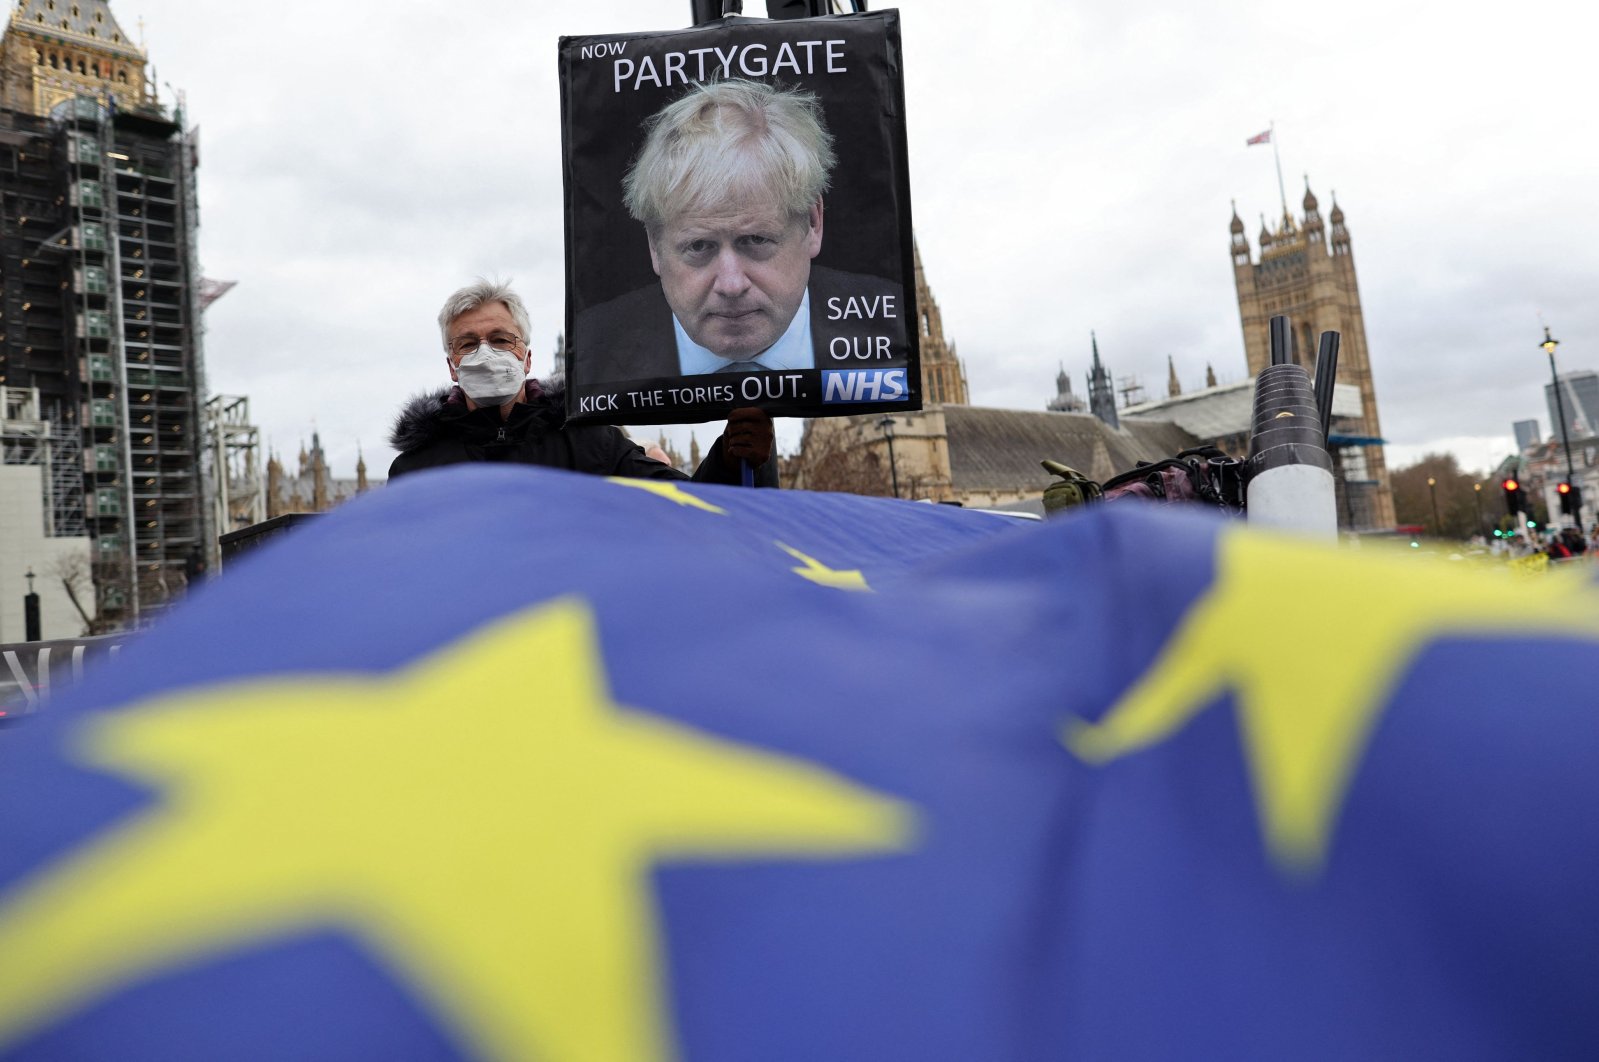 Peringkat Partai Konservatif Inggris turun setelah video pesta penguncian